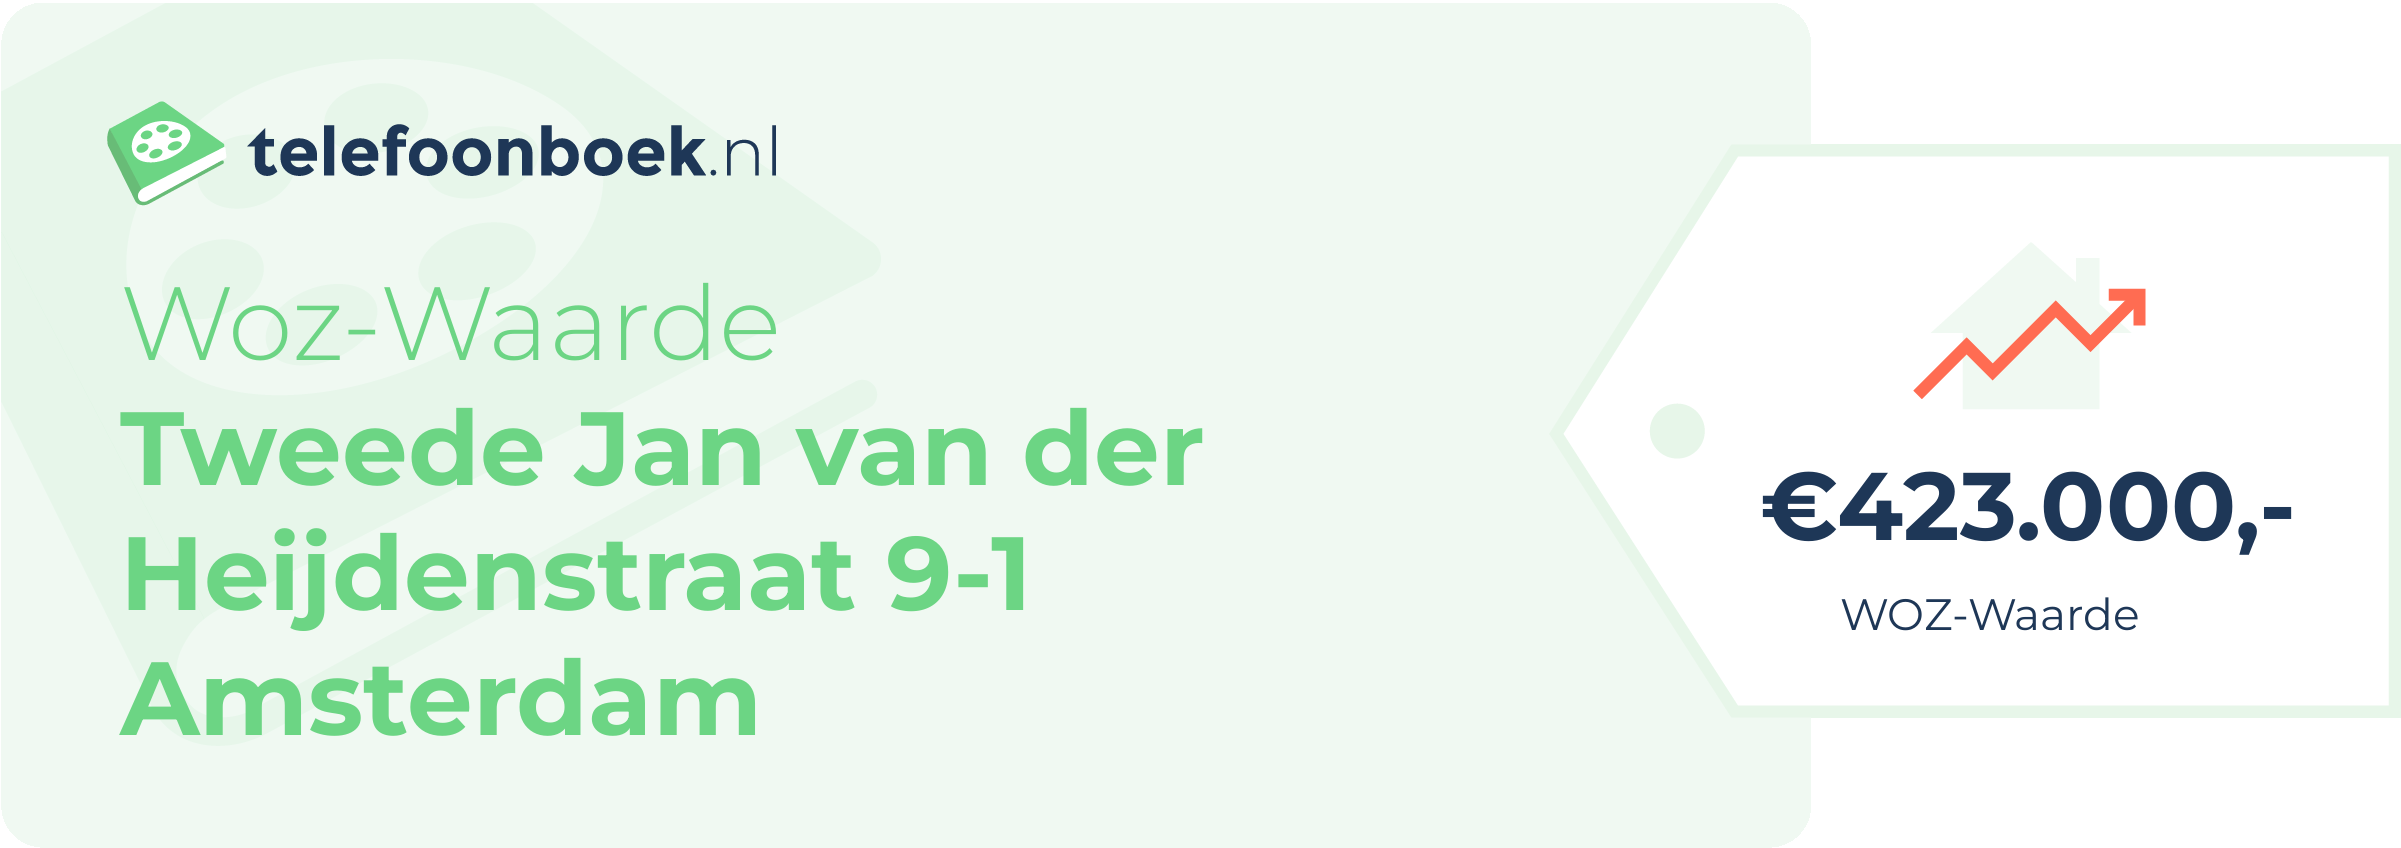 WOZ-waarde Tweede Jan Van Der Heijdenstraat 9-1 Amsterdam